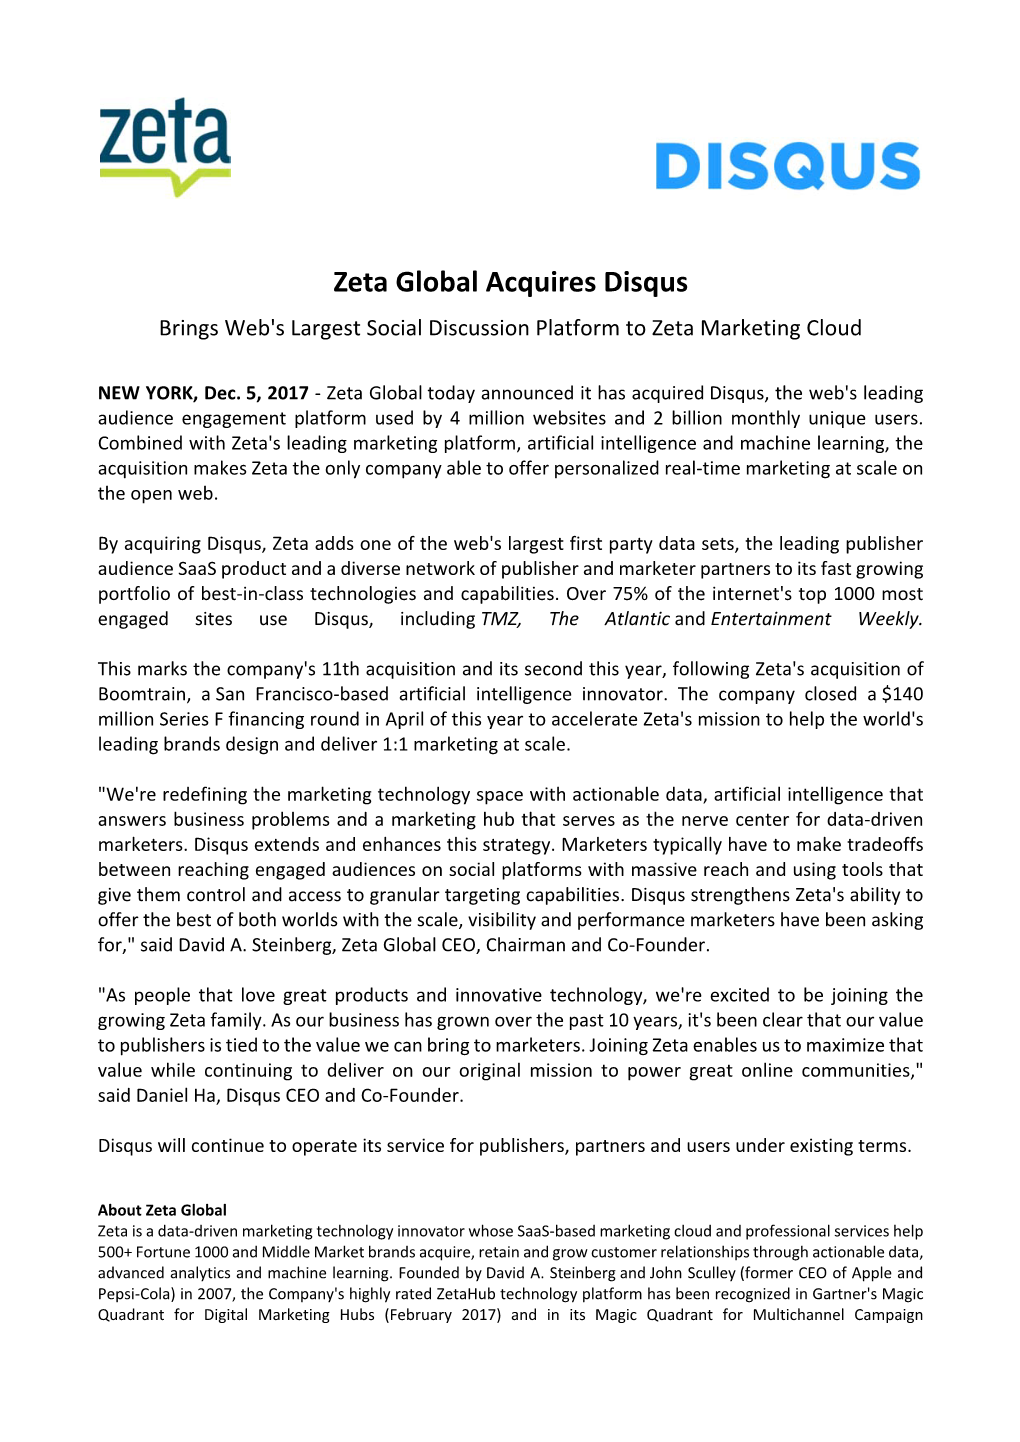 Zeta Global Acquires Disqus Brings Web's Largest Social Discussion Platform to Zeta Marketing Cloud